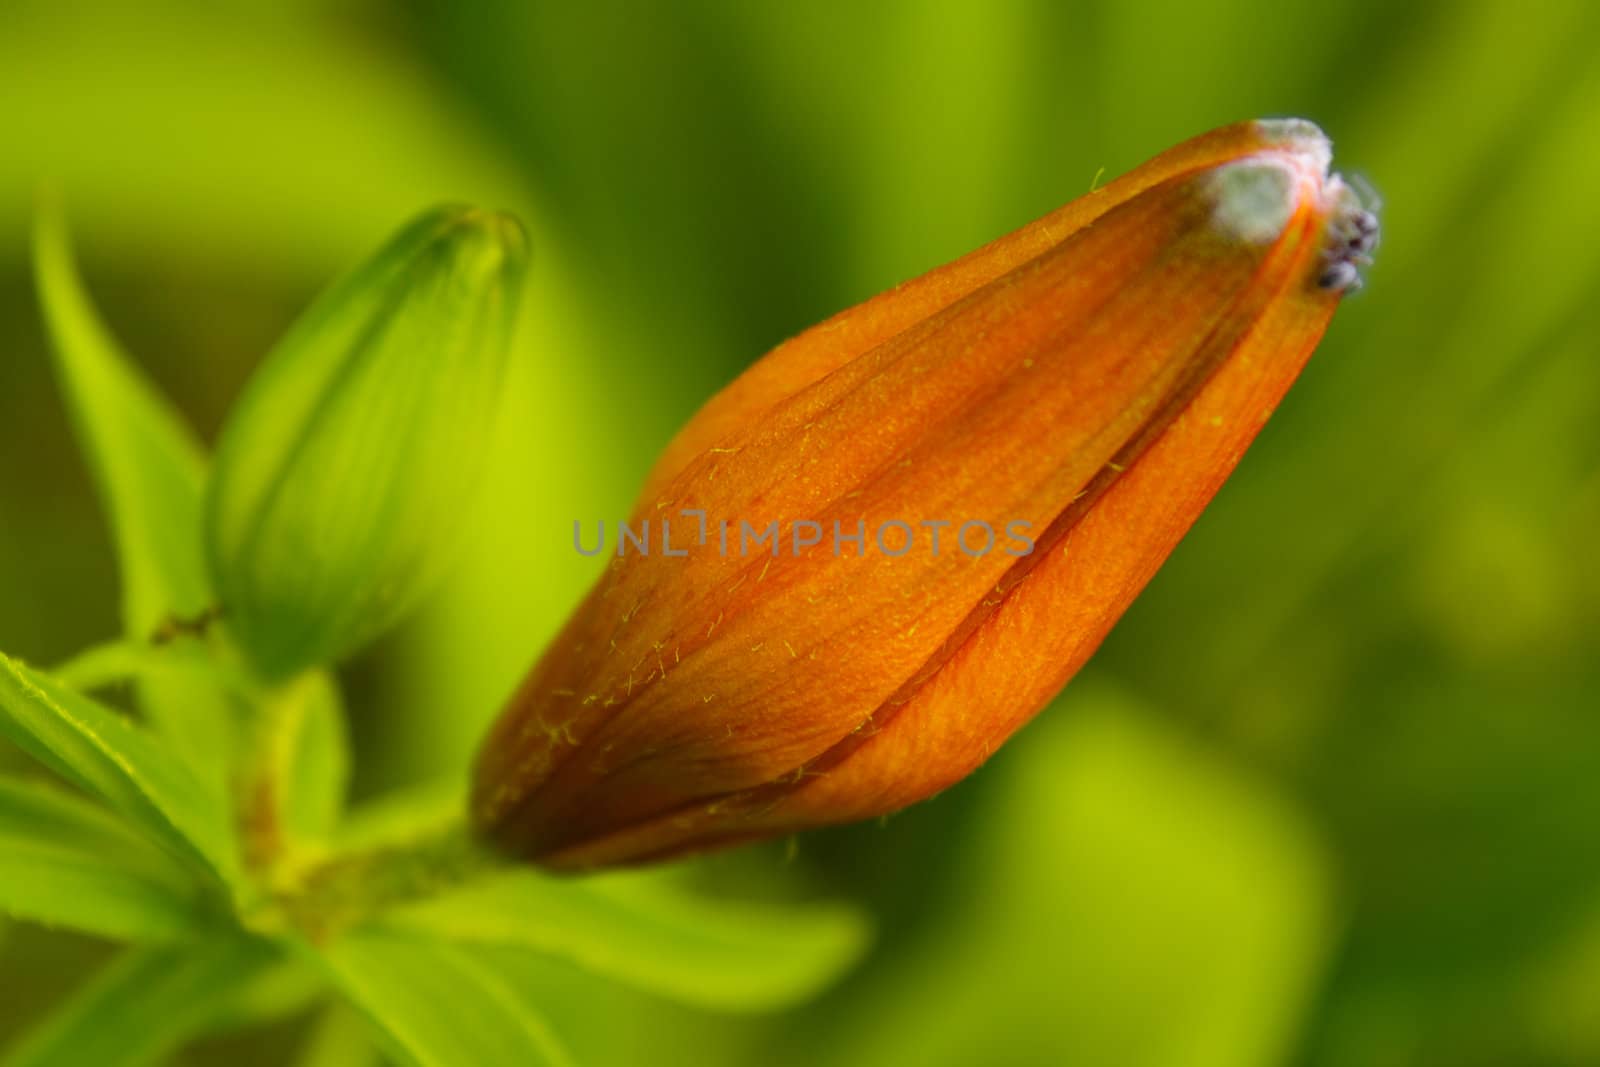 A photo of an orange lily bud